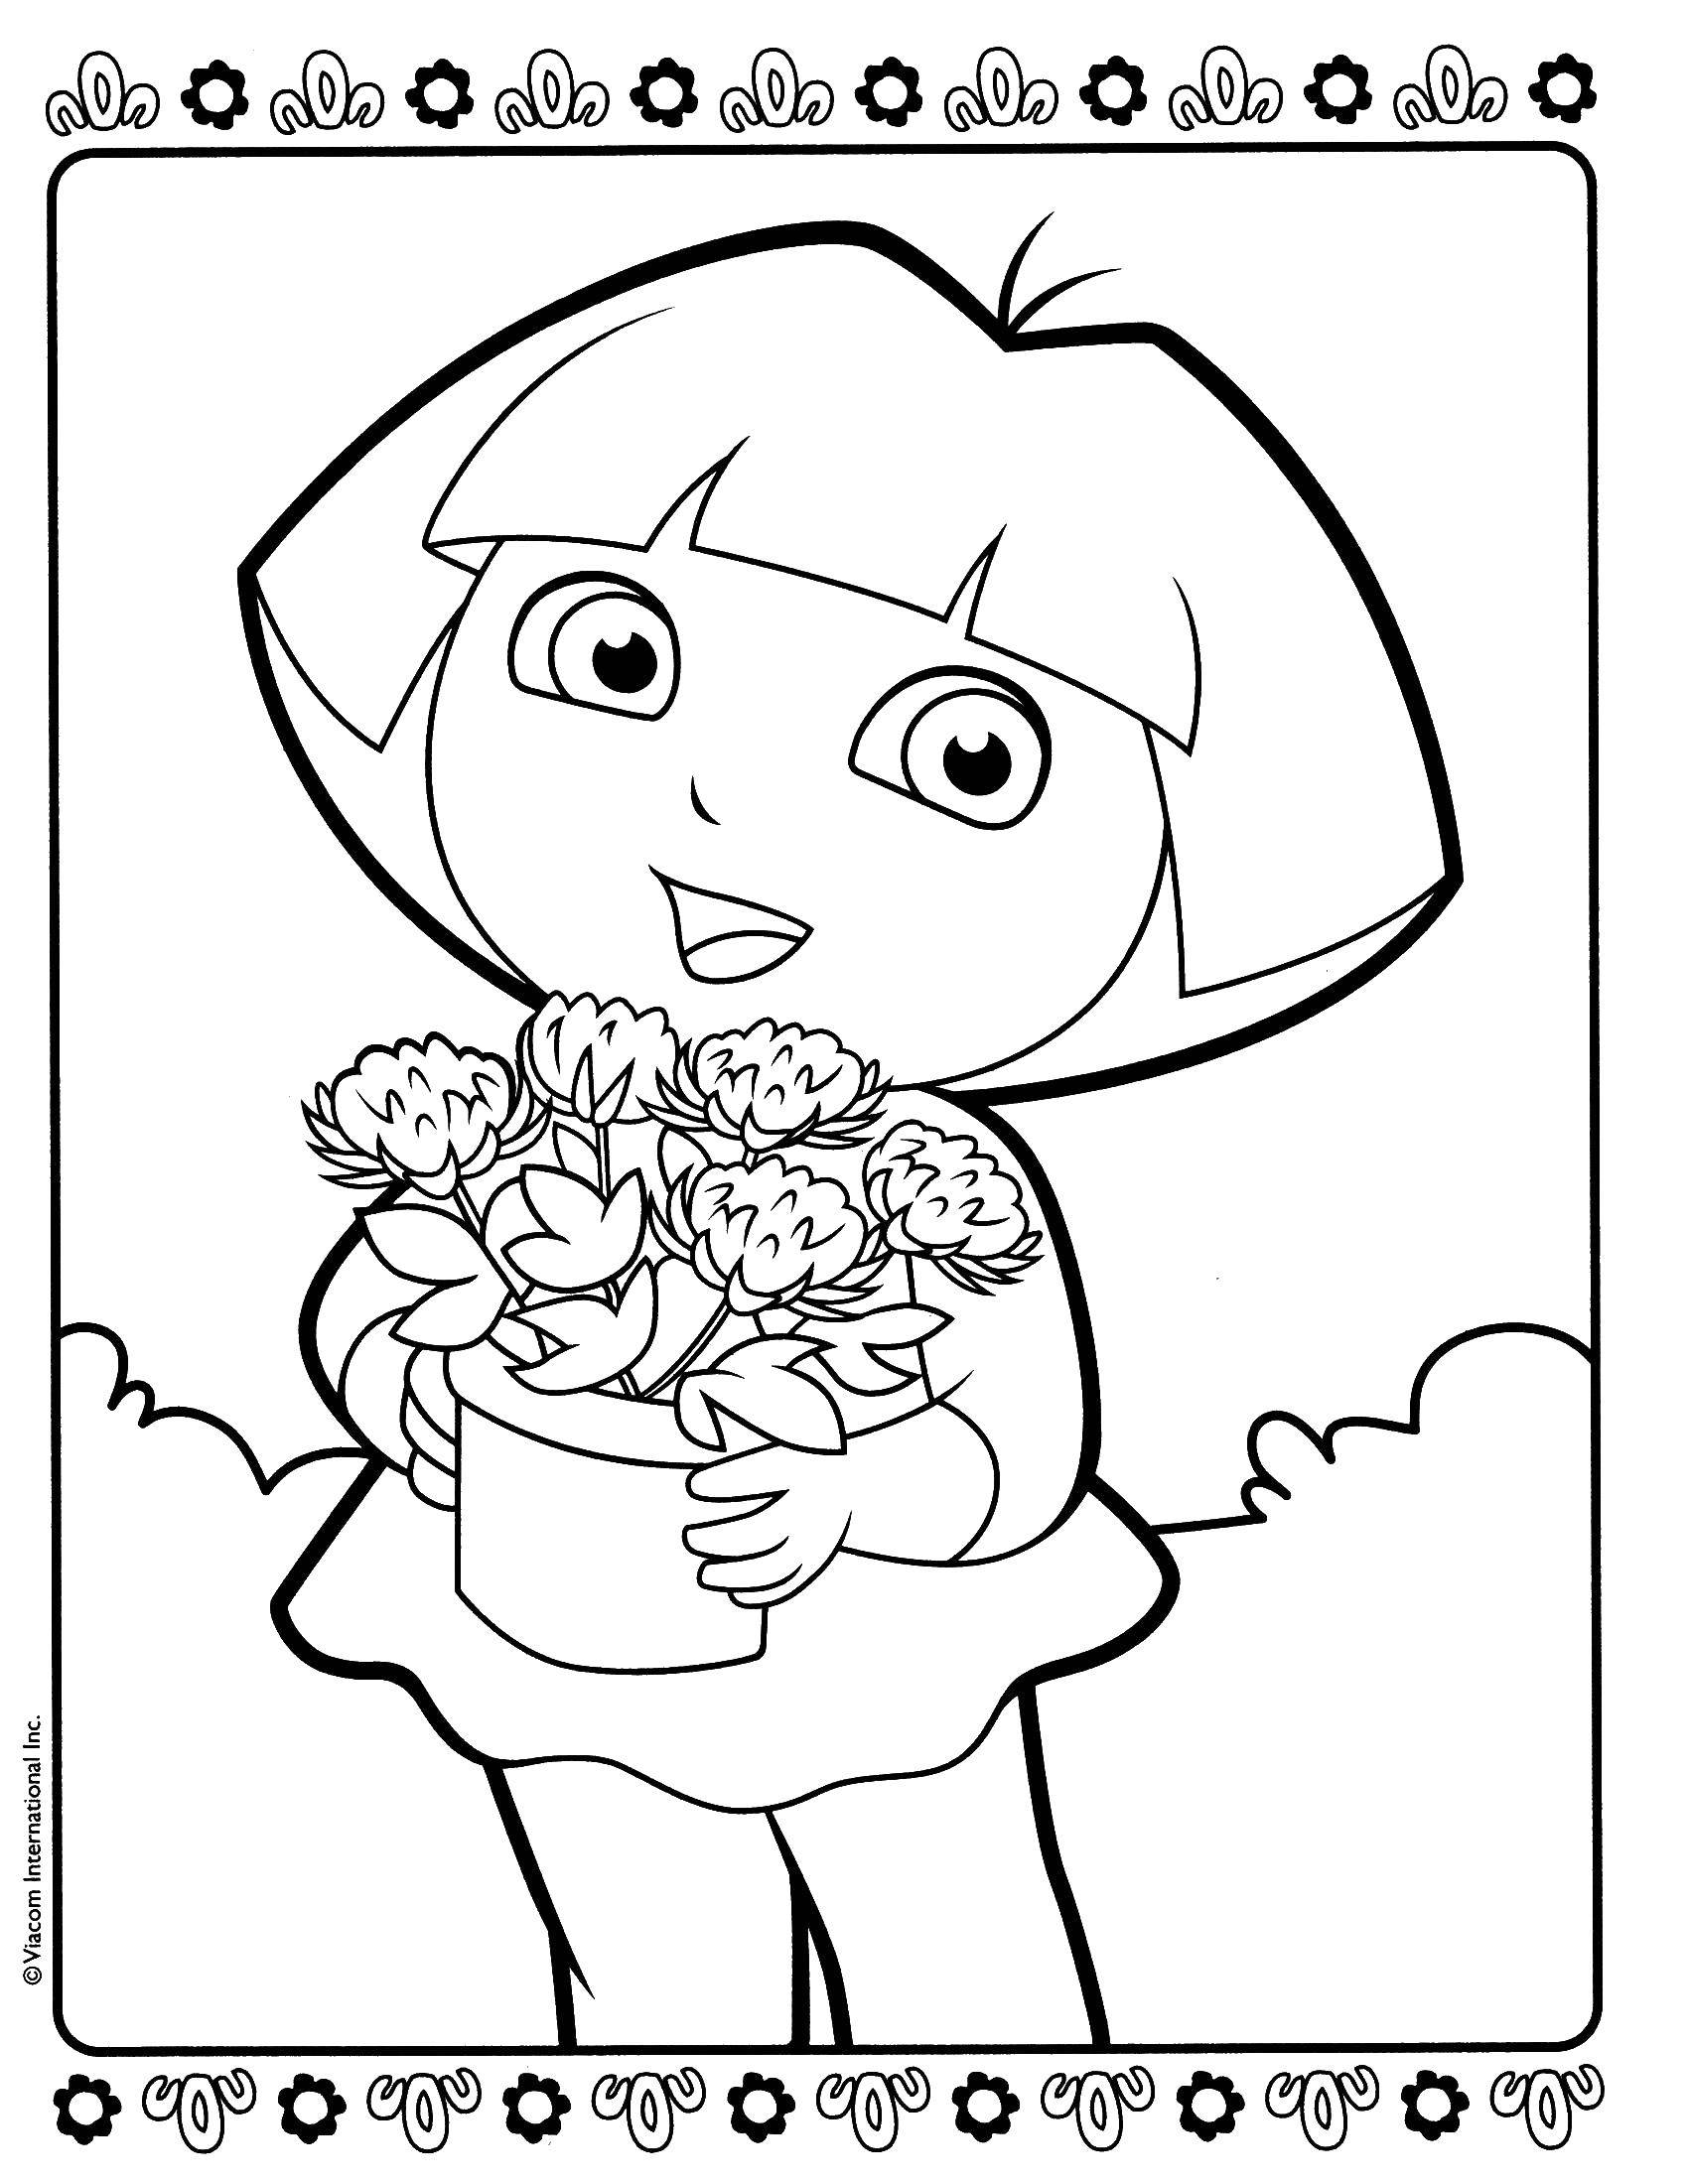 Coloring Dasha loves flowers. Category Dasha traveler. Tags:  Cartoon character.